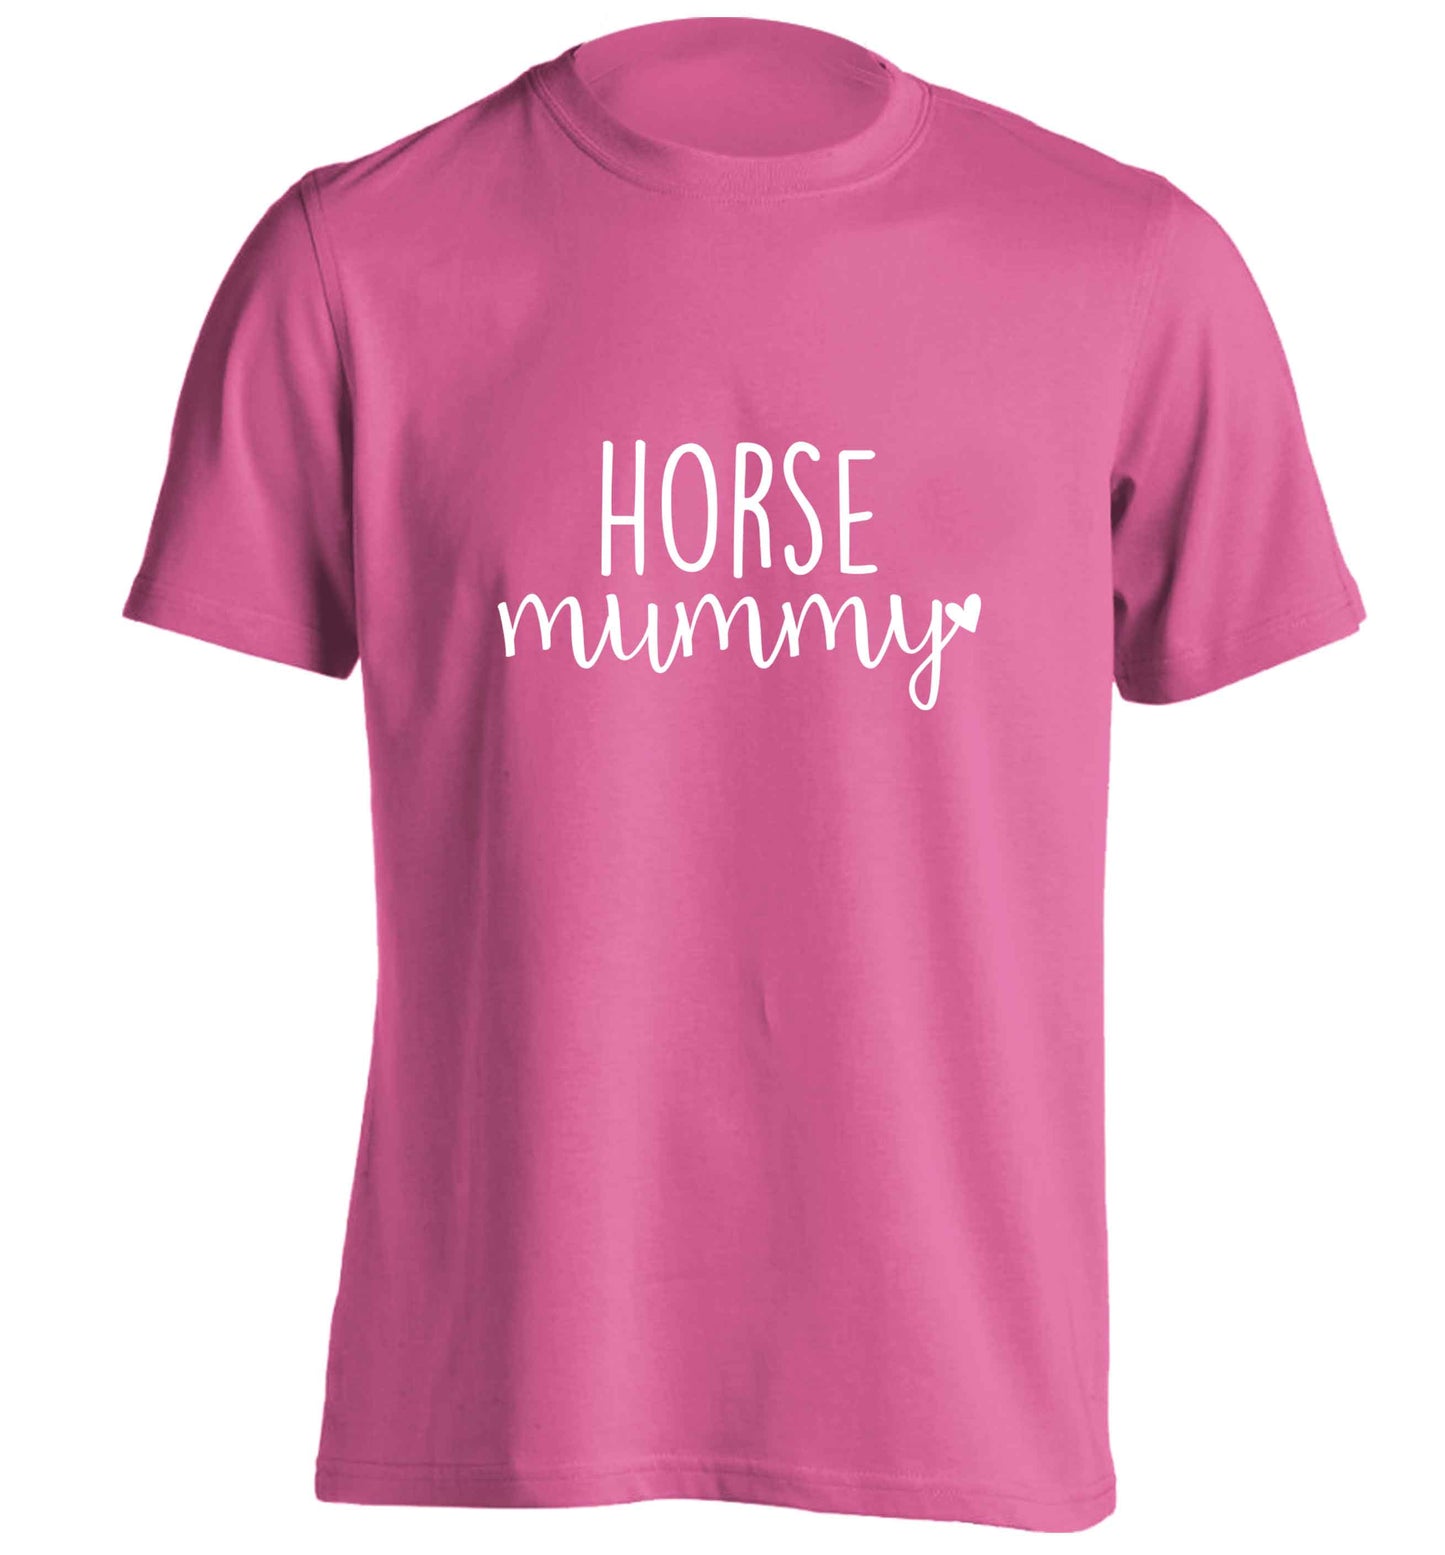 Horse mummy adults unisex pink Tshirt 2XL